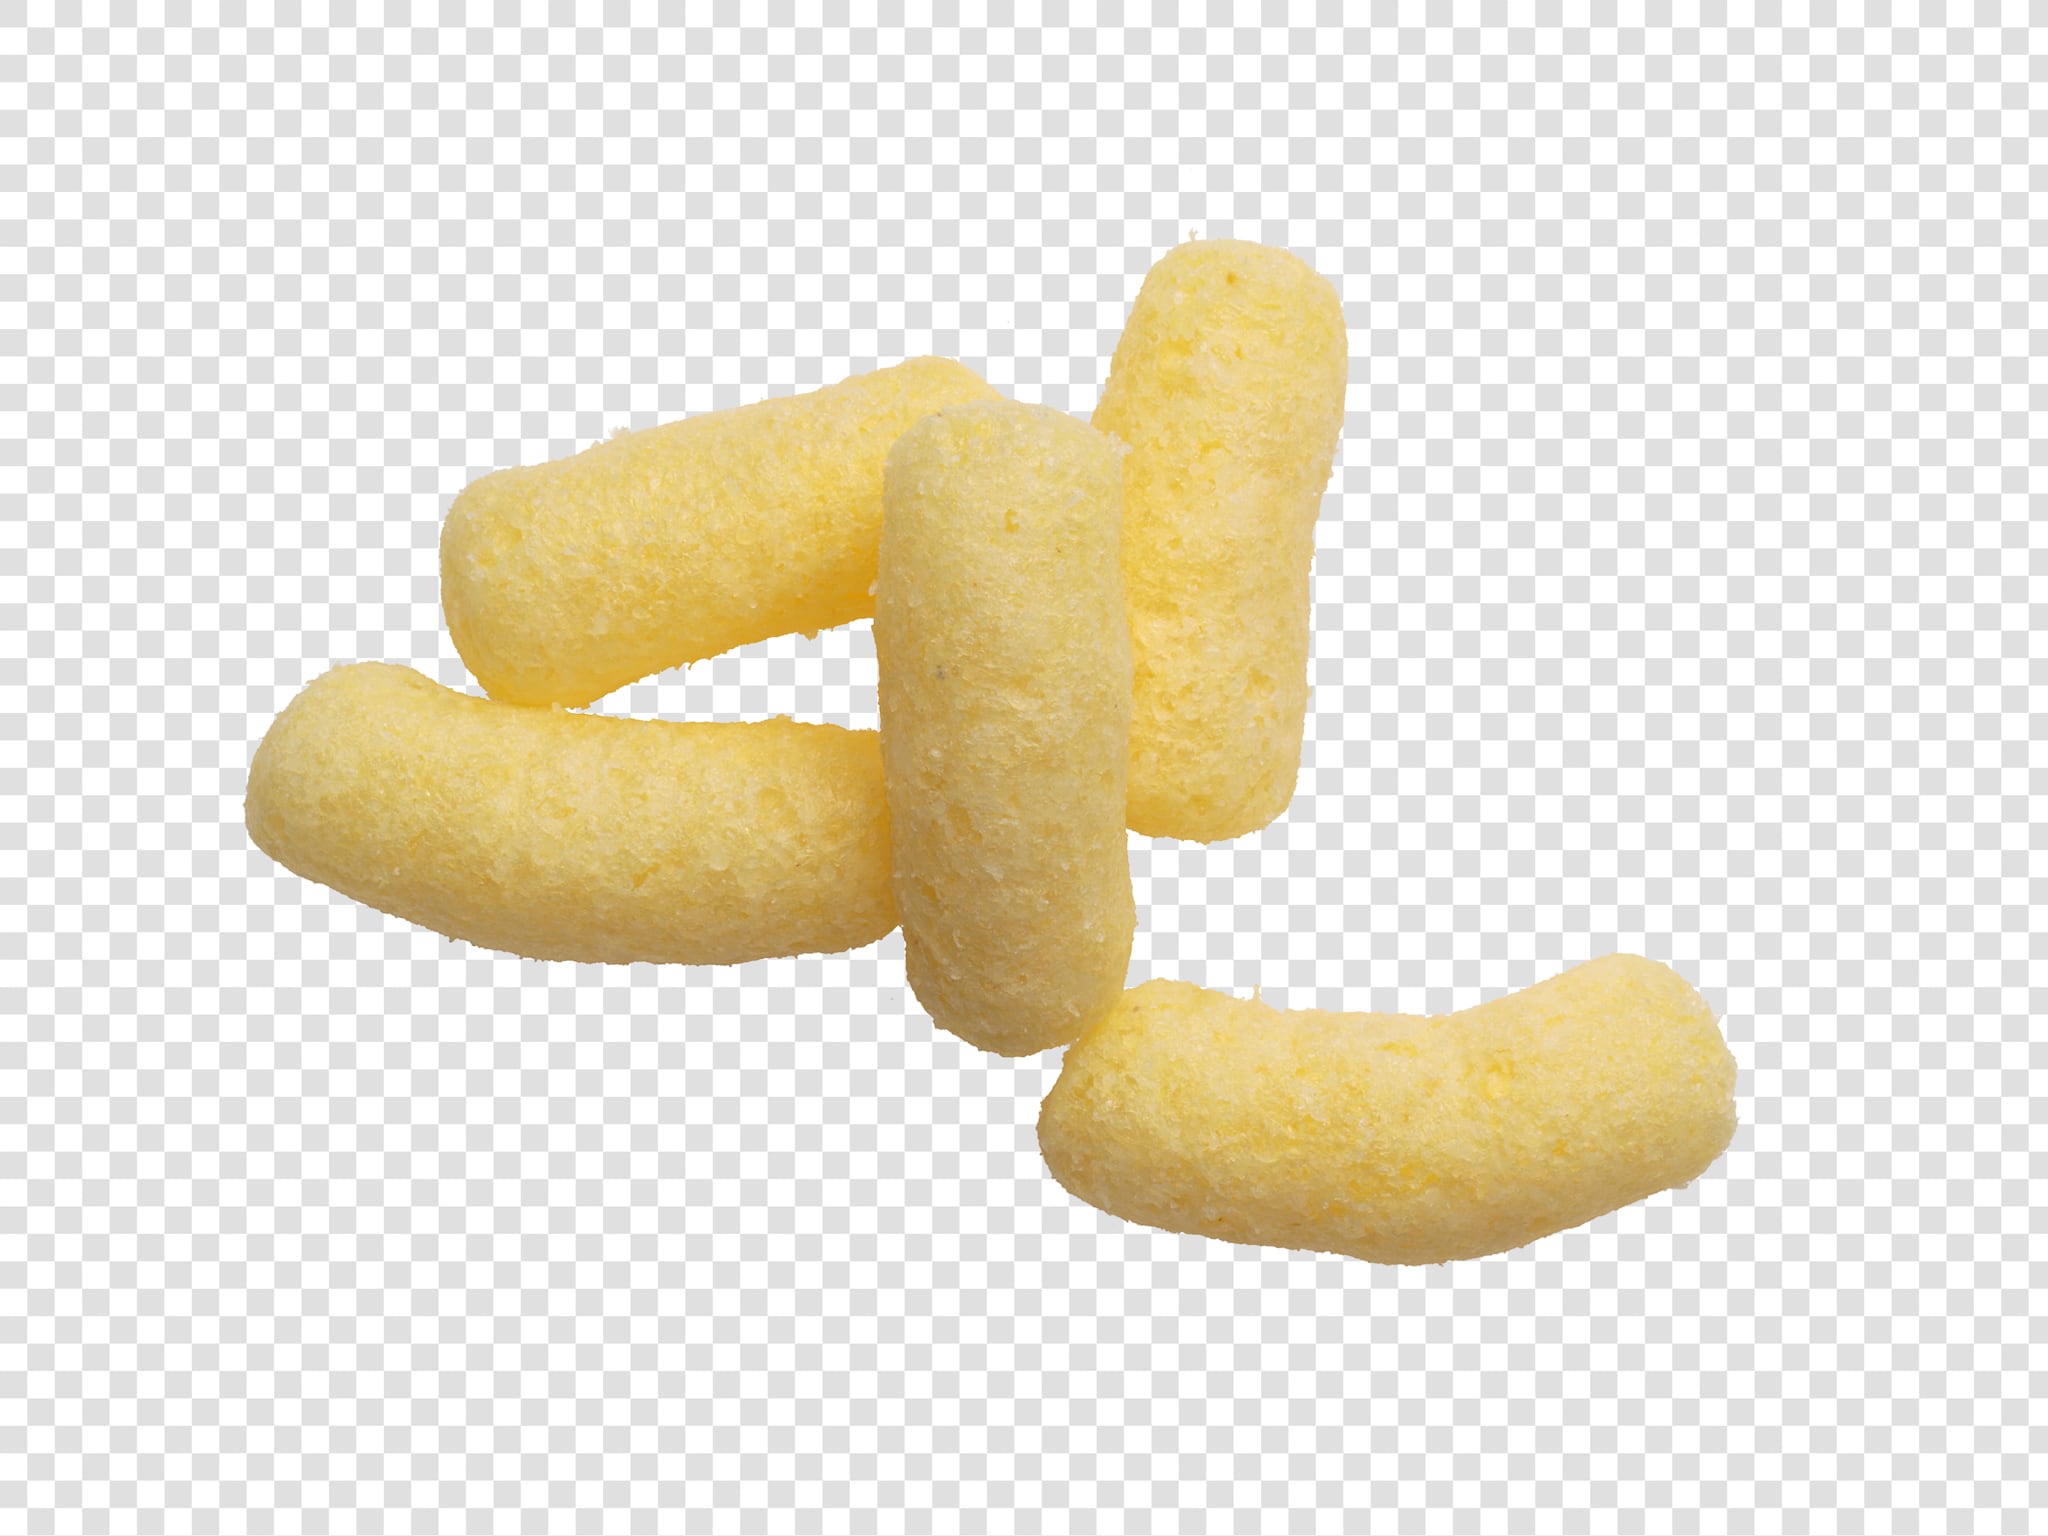 Corn sticks PSD isolated image